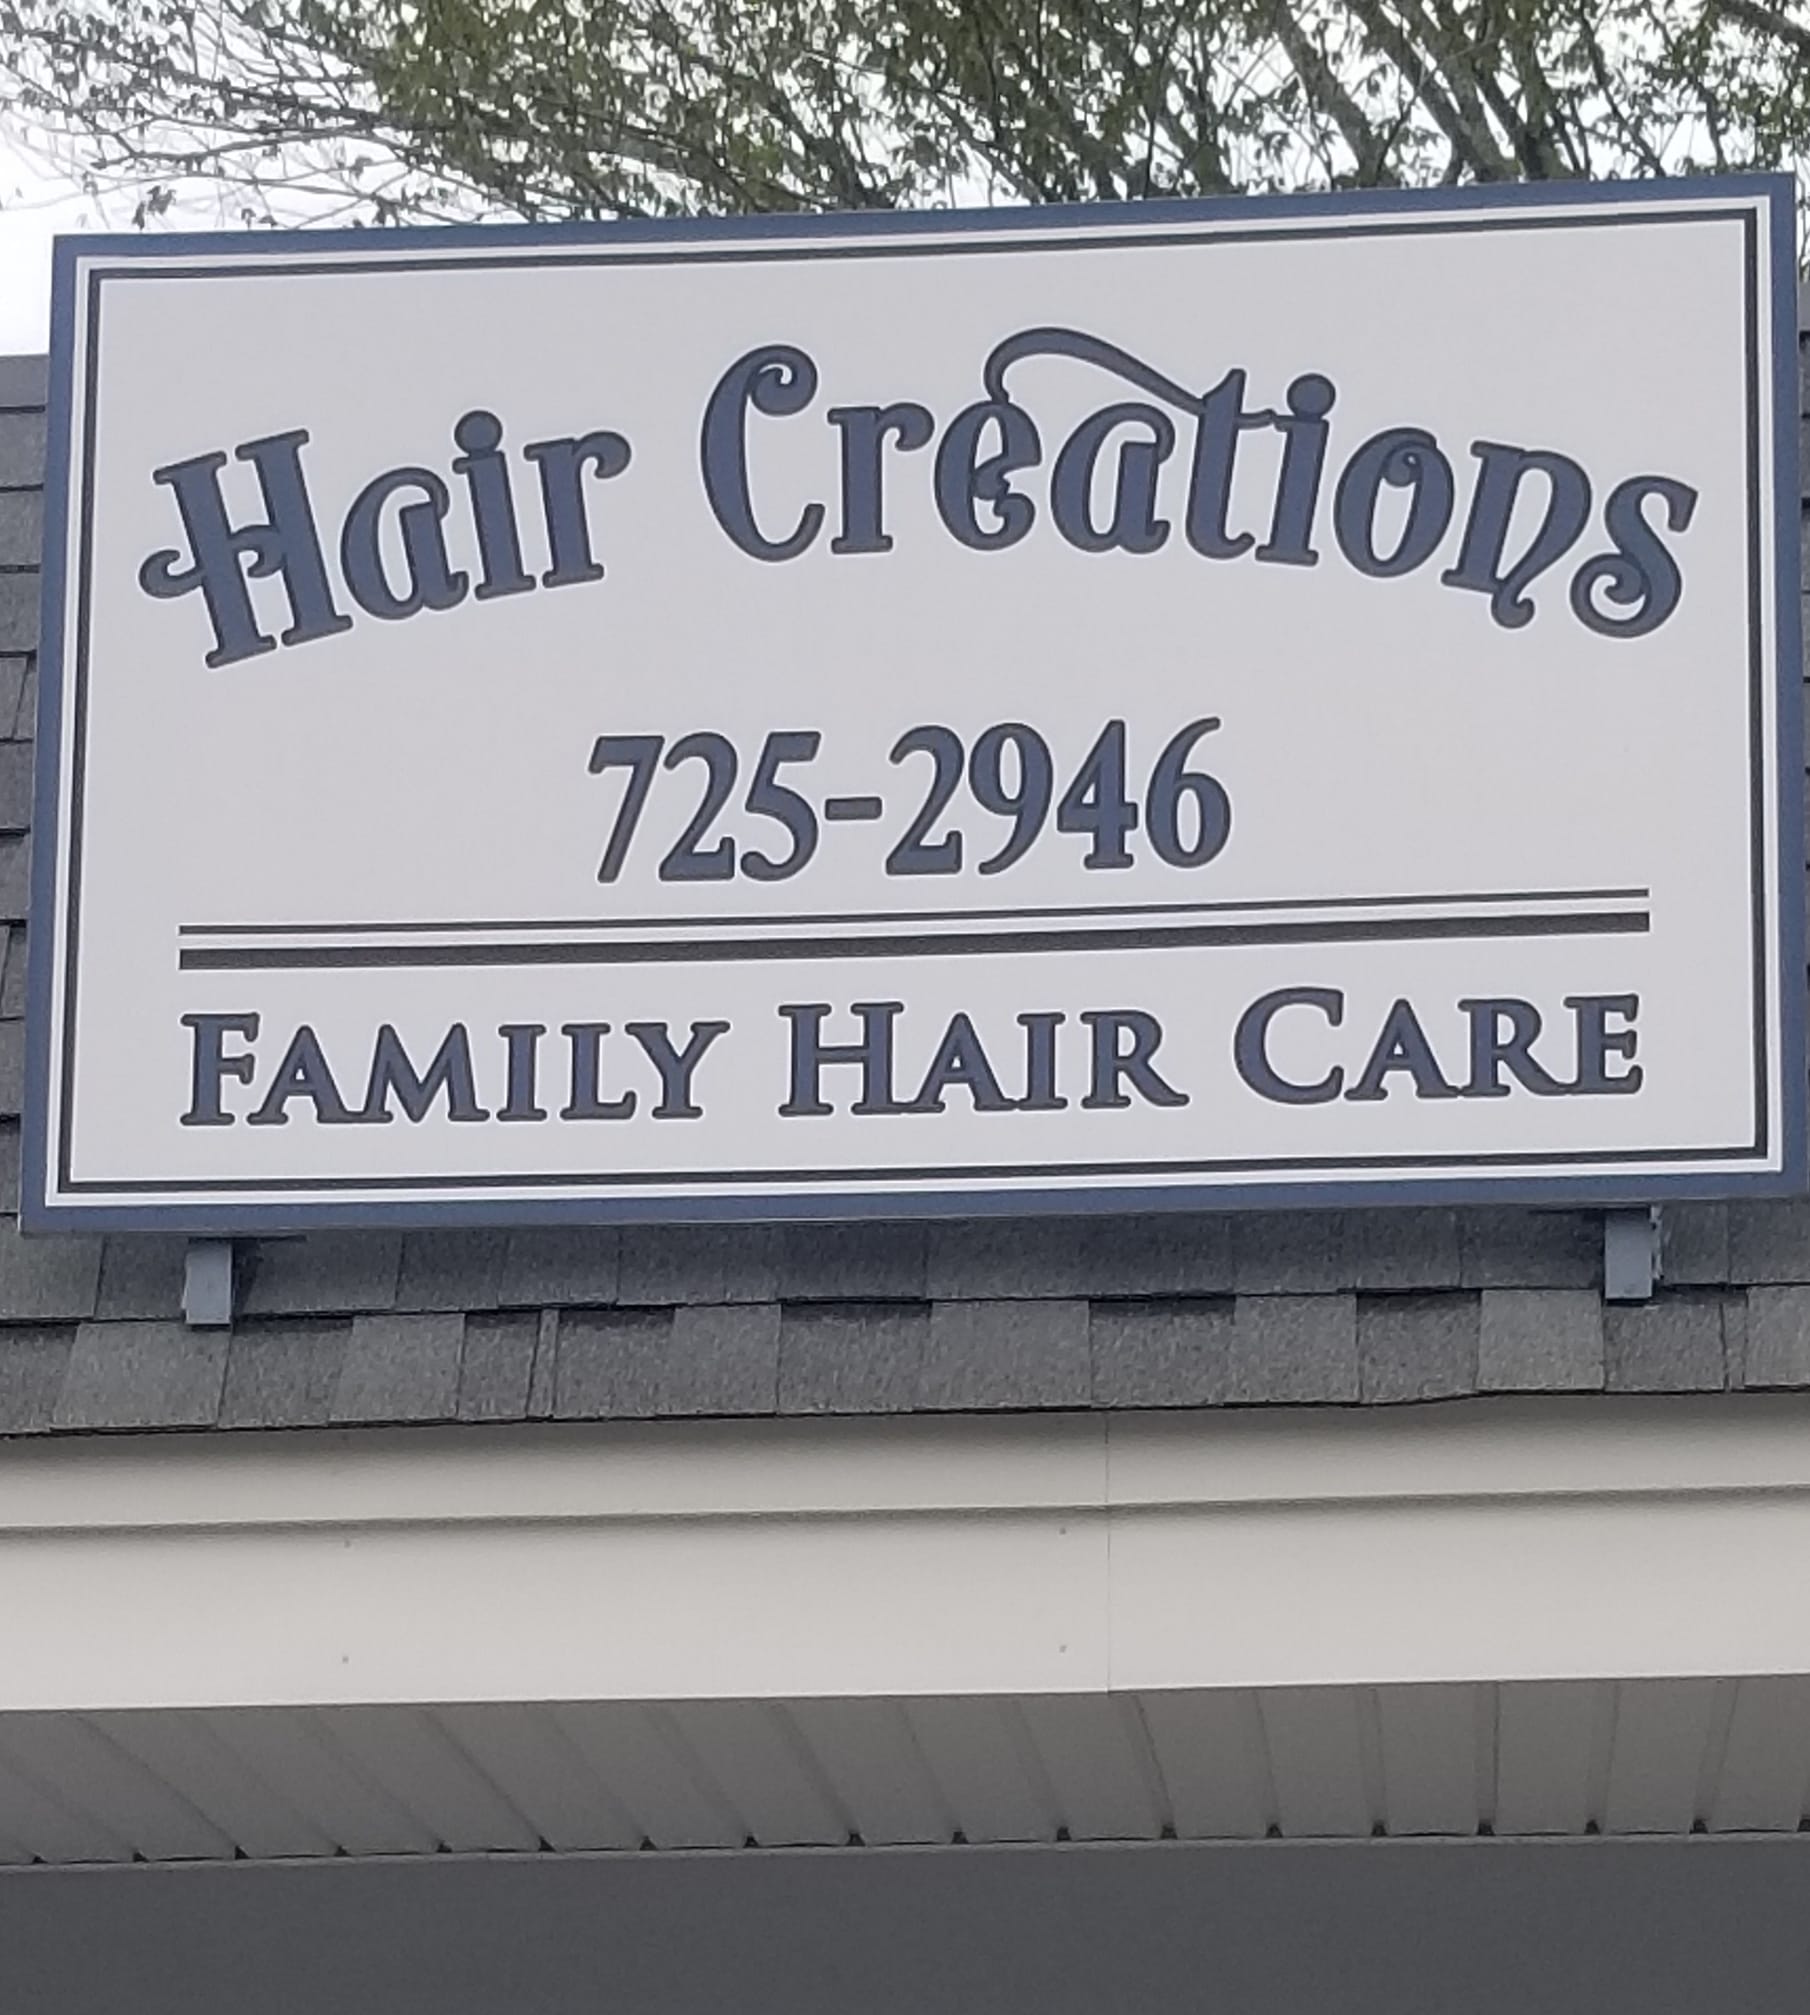 Hair Creations 312 Main St, Mathews Virginia 23109